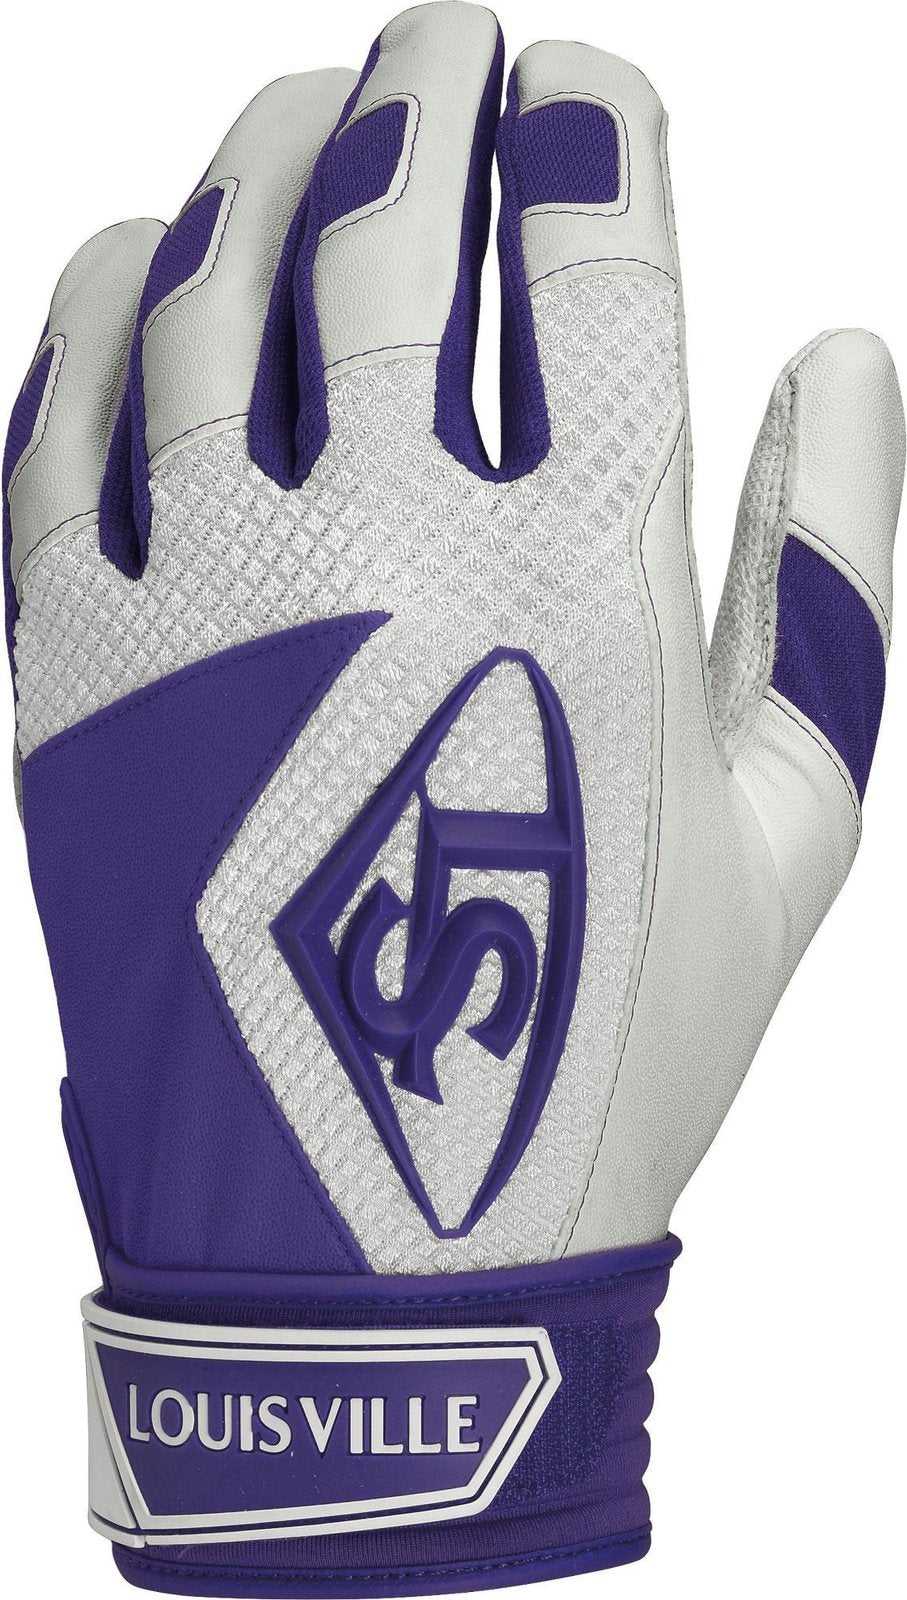 Louisville Slugger Series 7 Adult Batting Gloves - Purple - HIT A Double